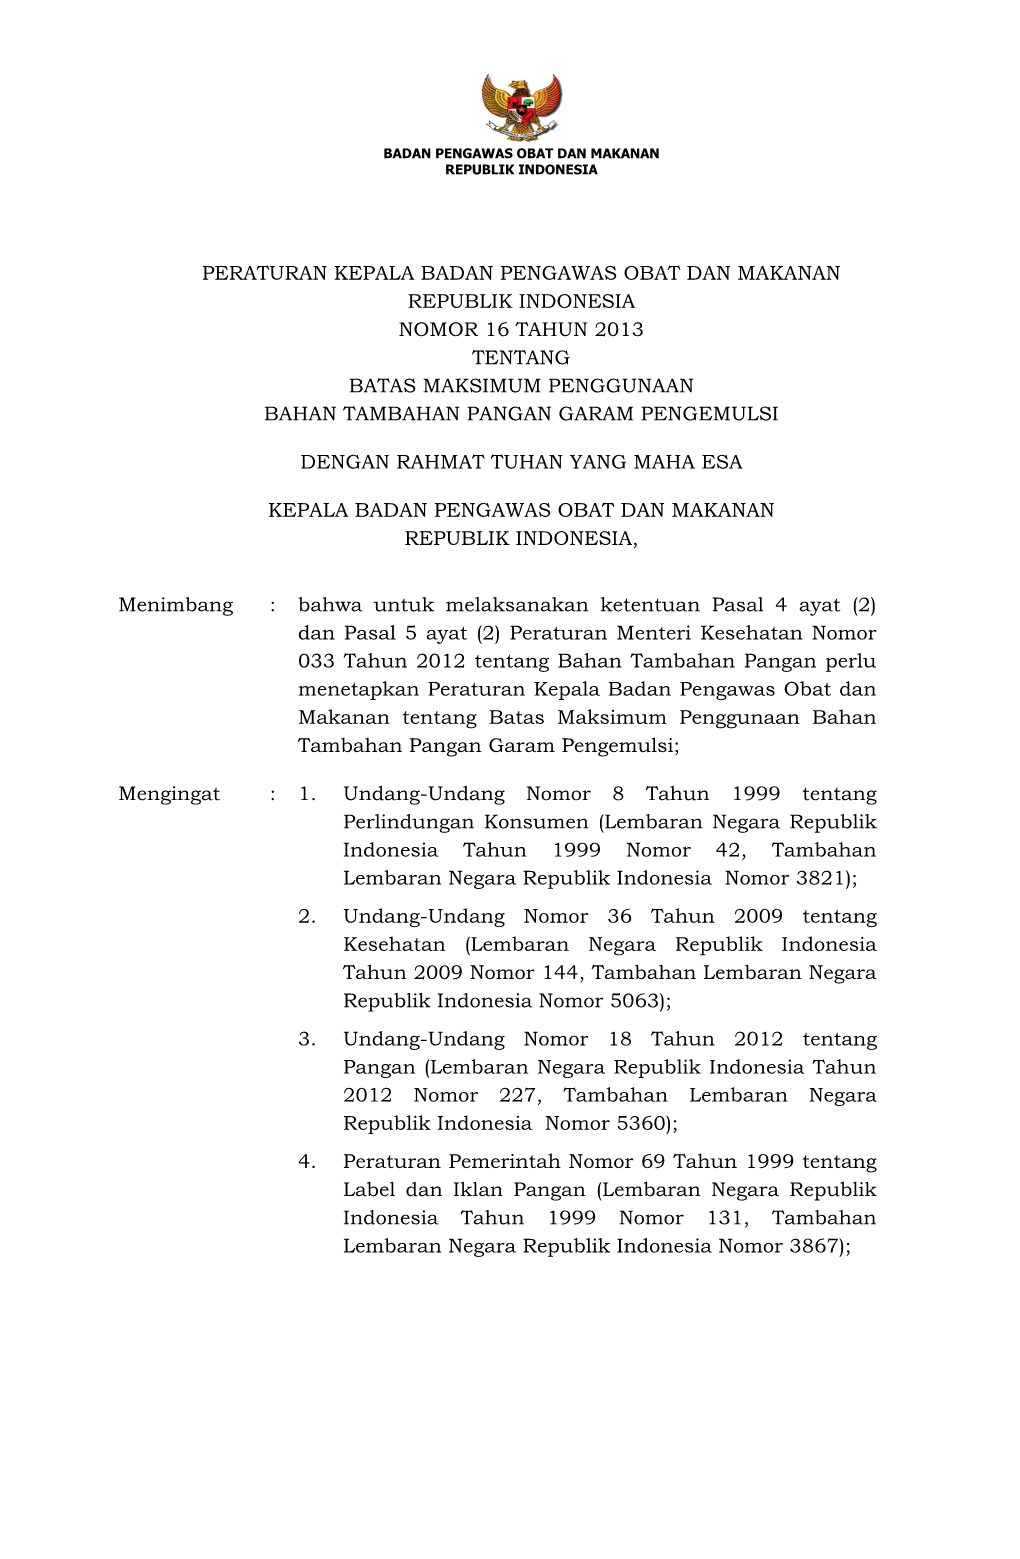 Peraturan Kepala Badan Pengawas Obat Dan Makanan Republik Indonesia Nomor 16 Tahun 2013 Tentang Batas Maksimum Penggunaan Bahan Tambahan Pangan Garam Pengemulsi